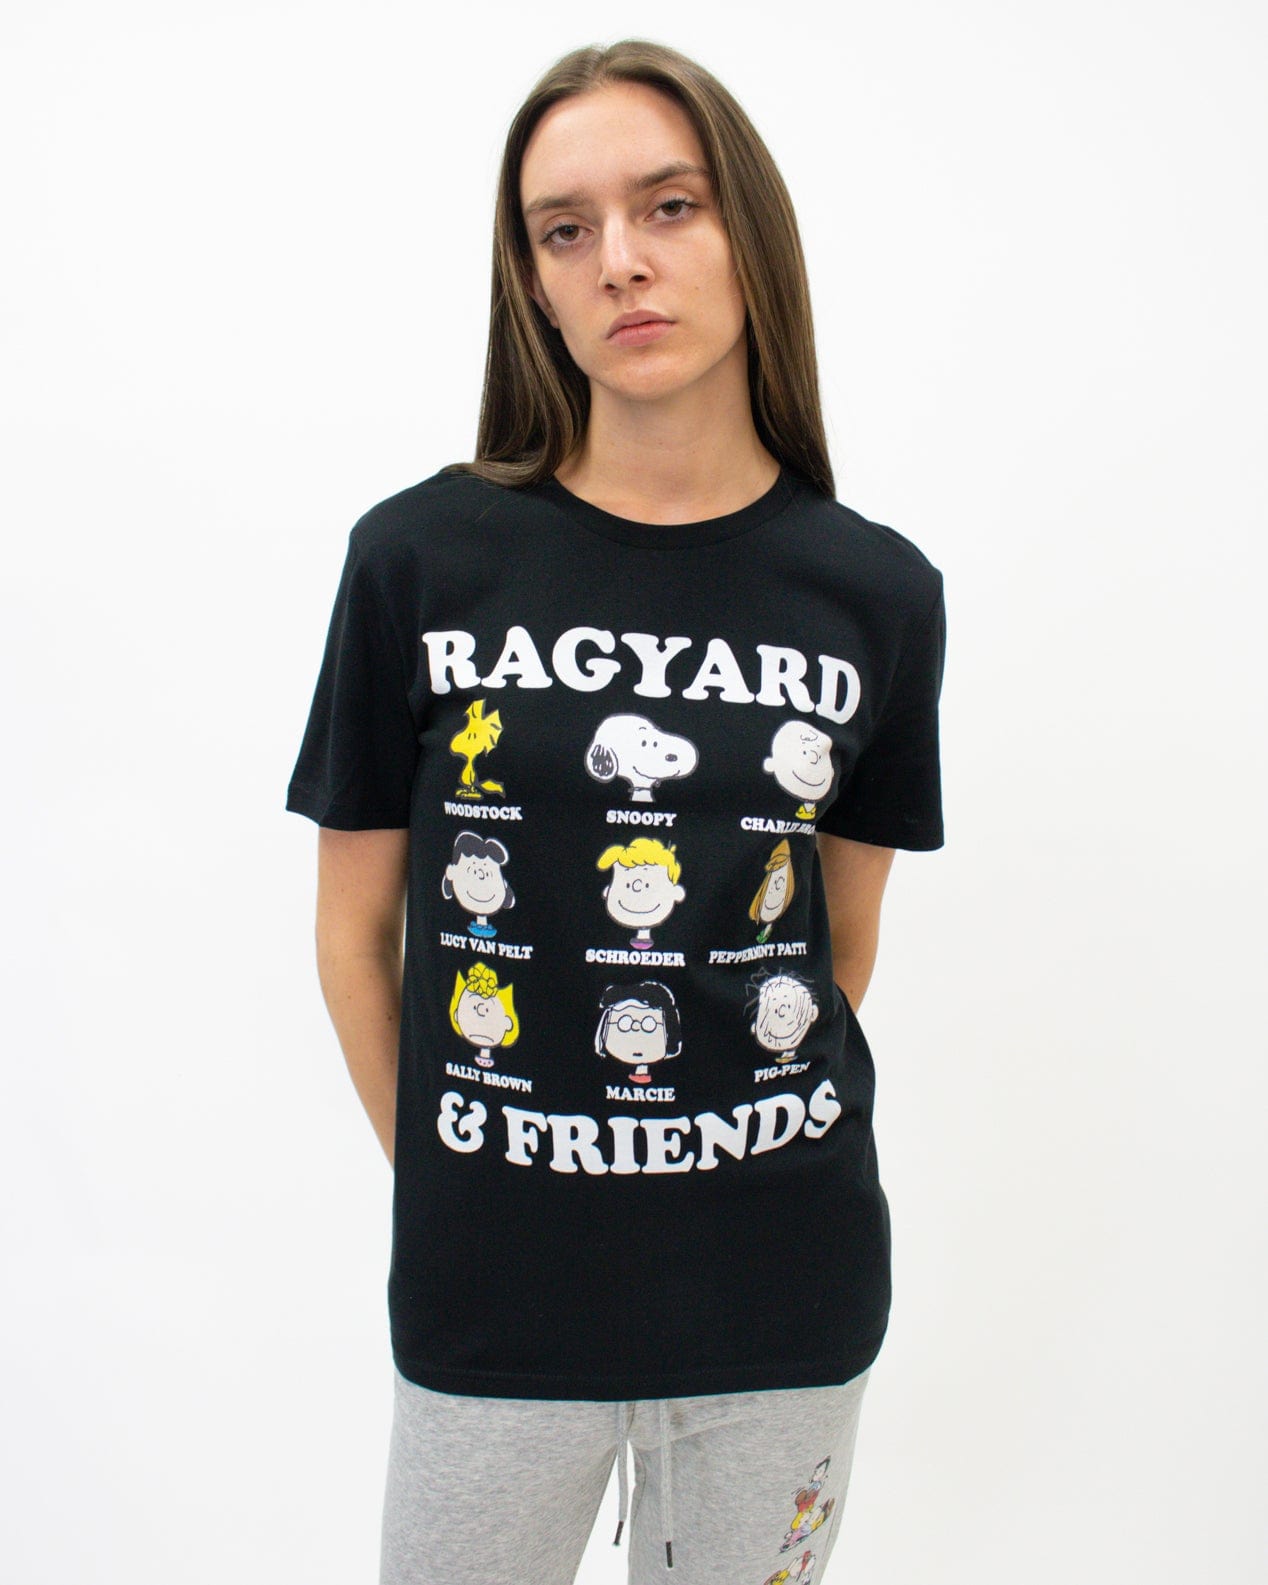 Ragyard X Peanuts Ragyard and Friends T-shirt